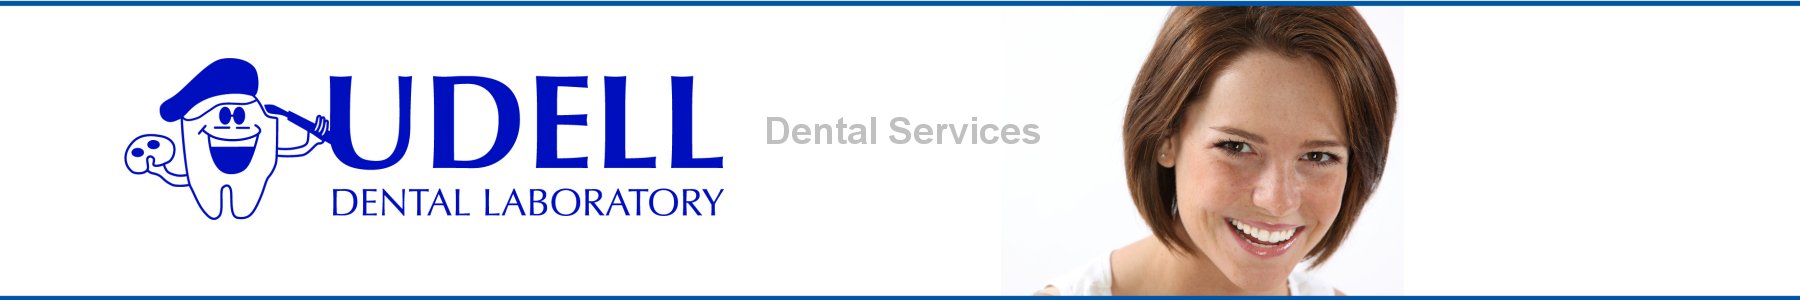 Udell Dental Laboratory Services